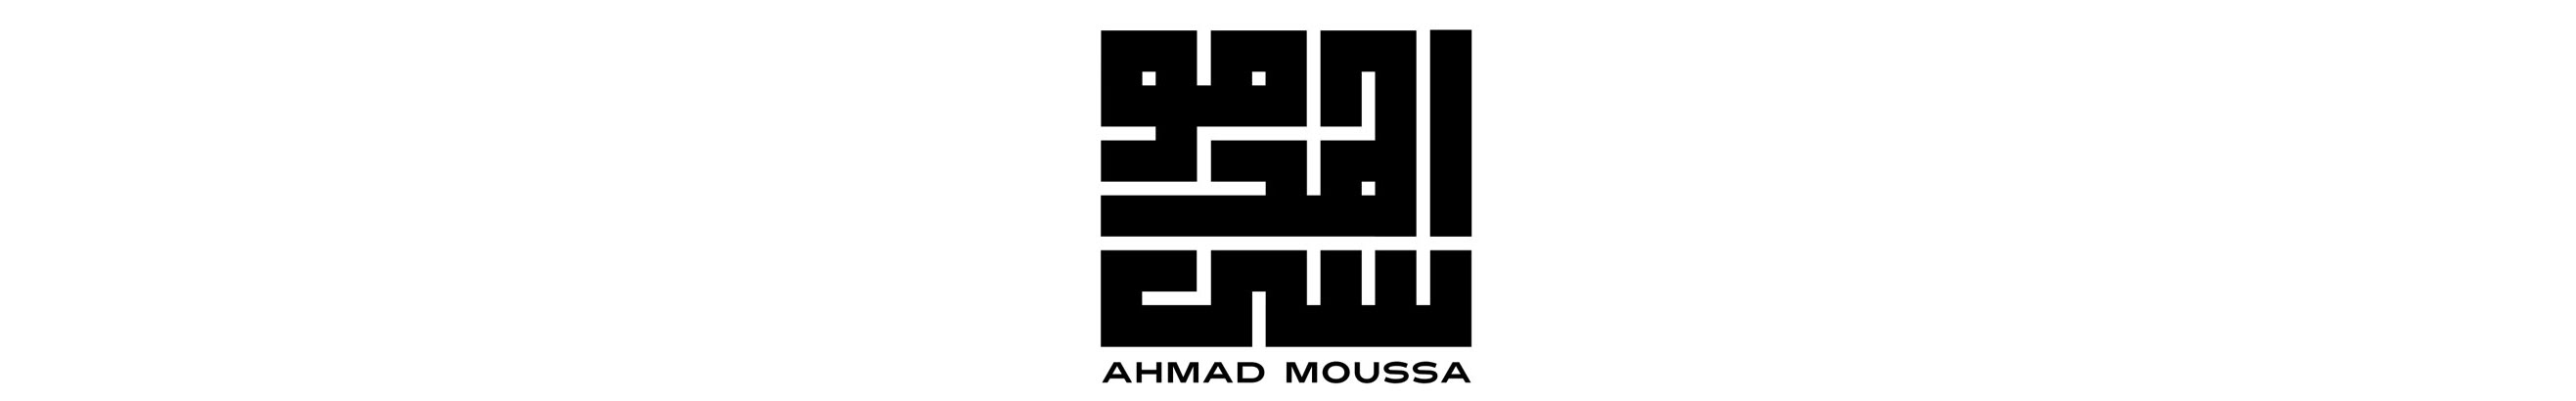 Ahmad Moussa's profile banner